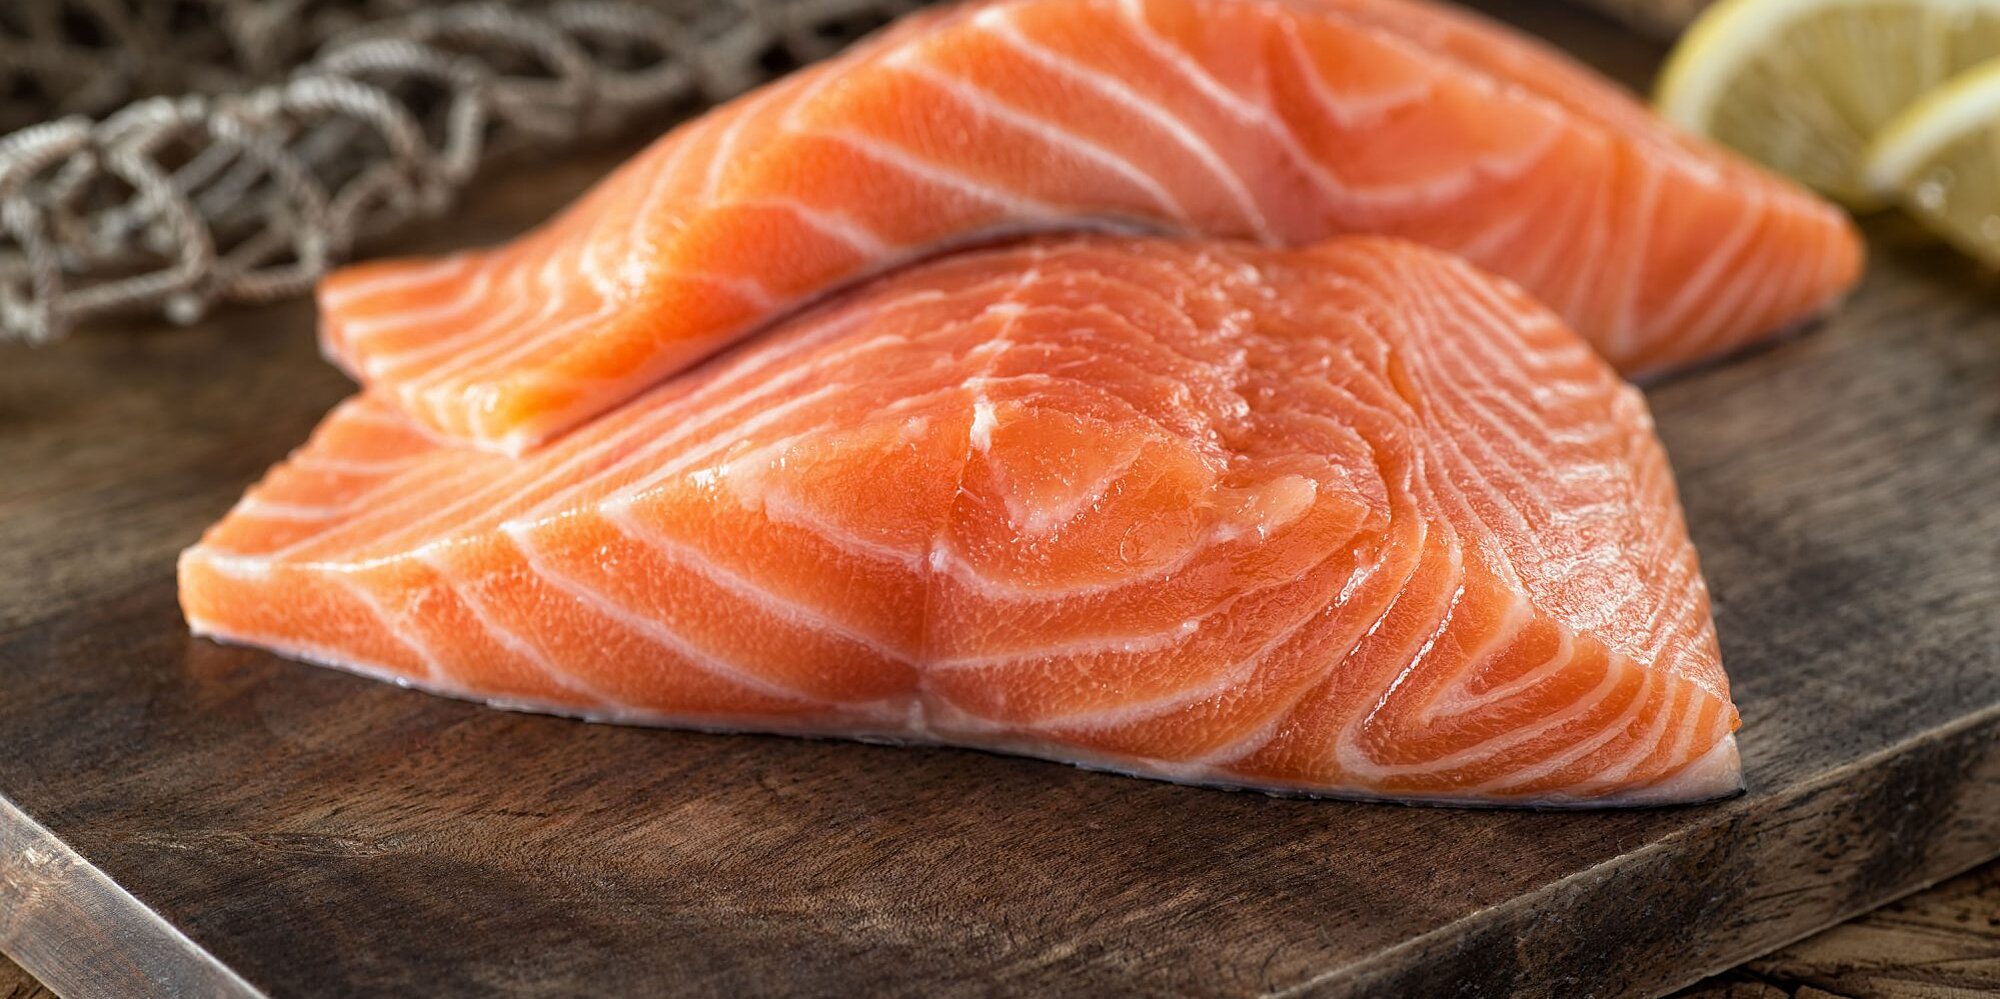 Salmon and its health benefits